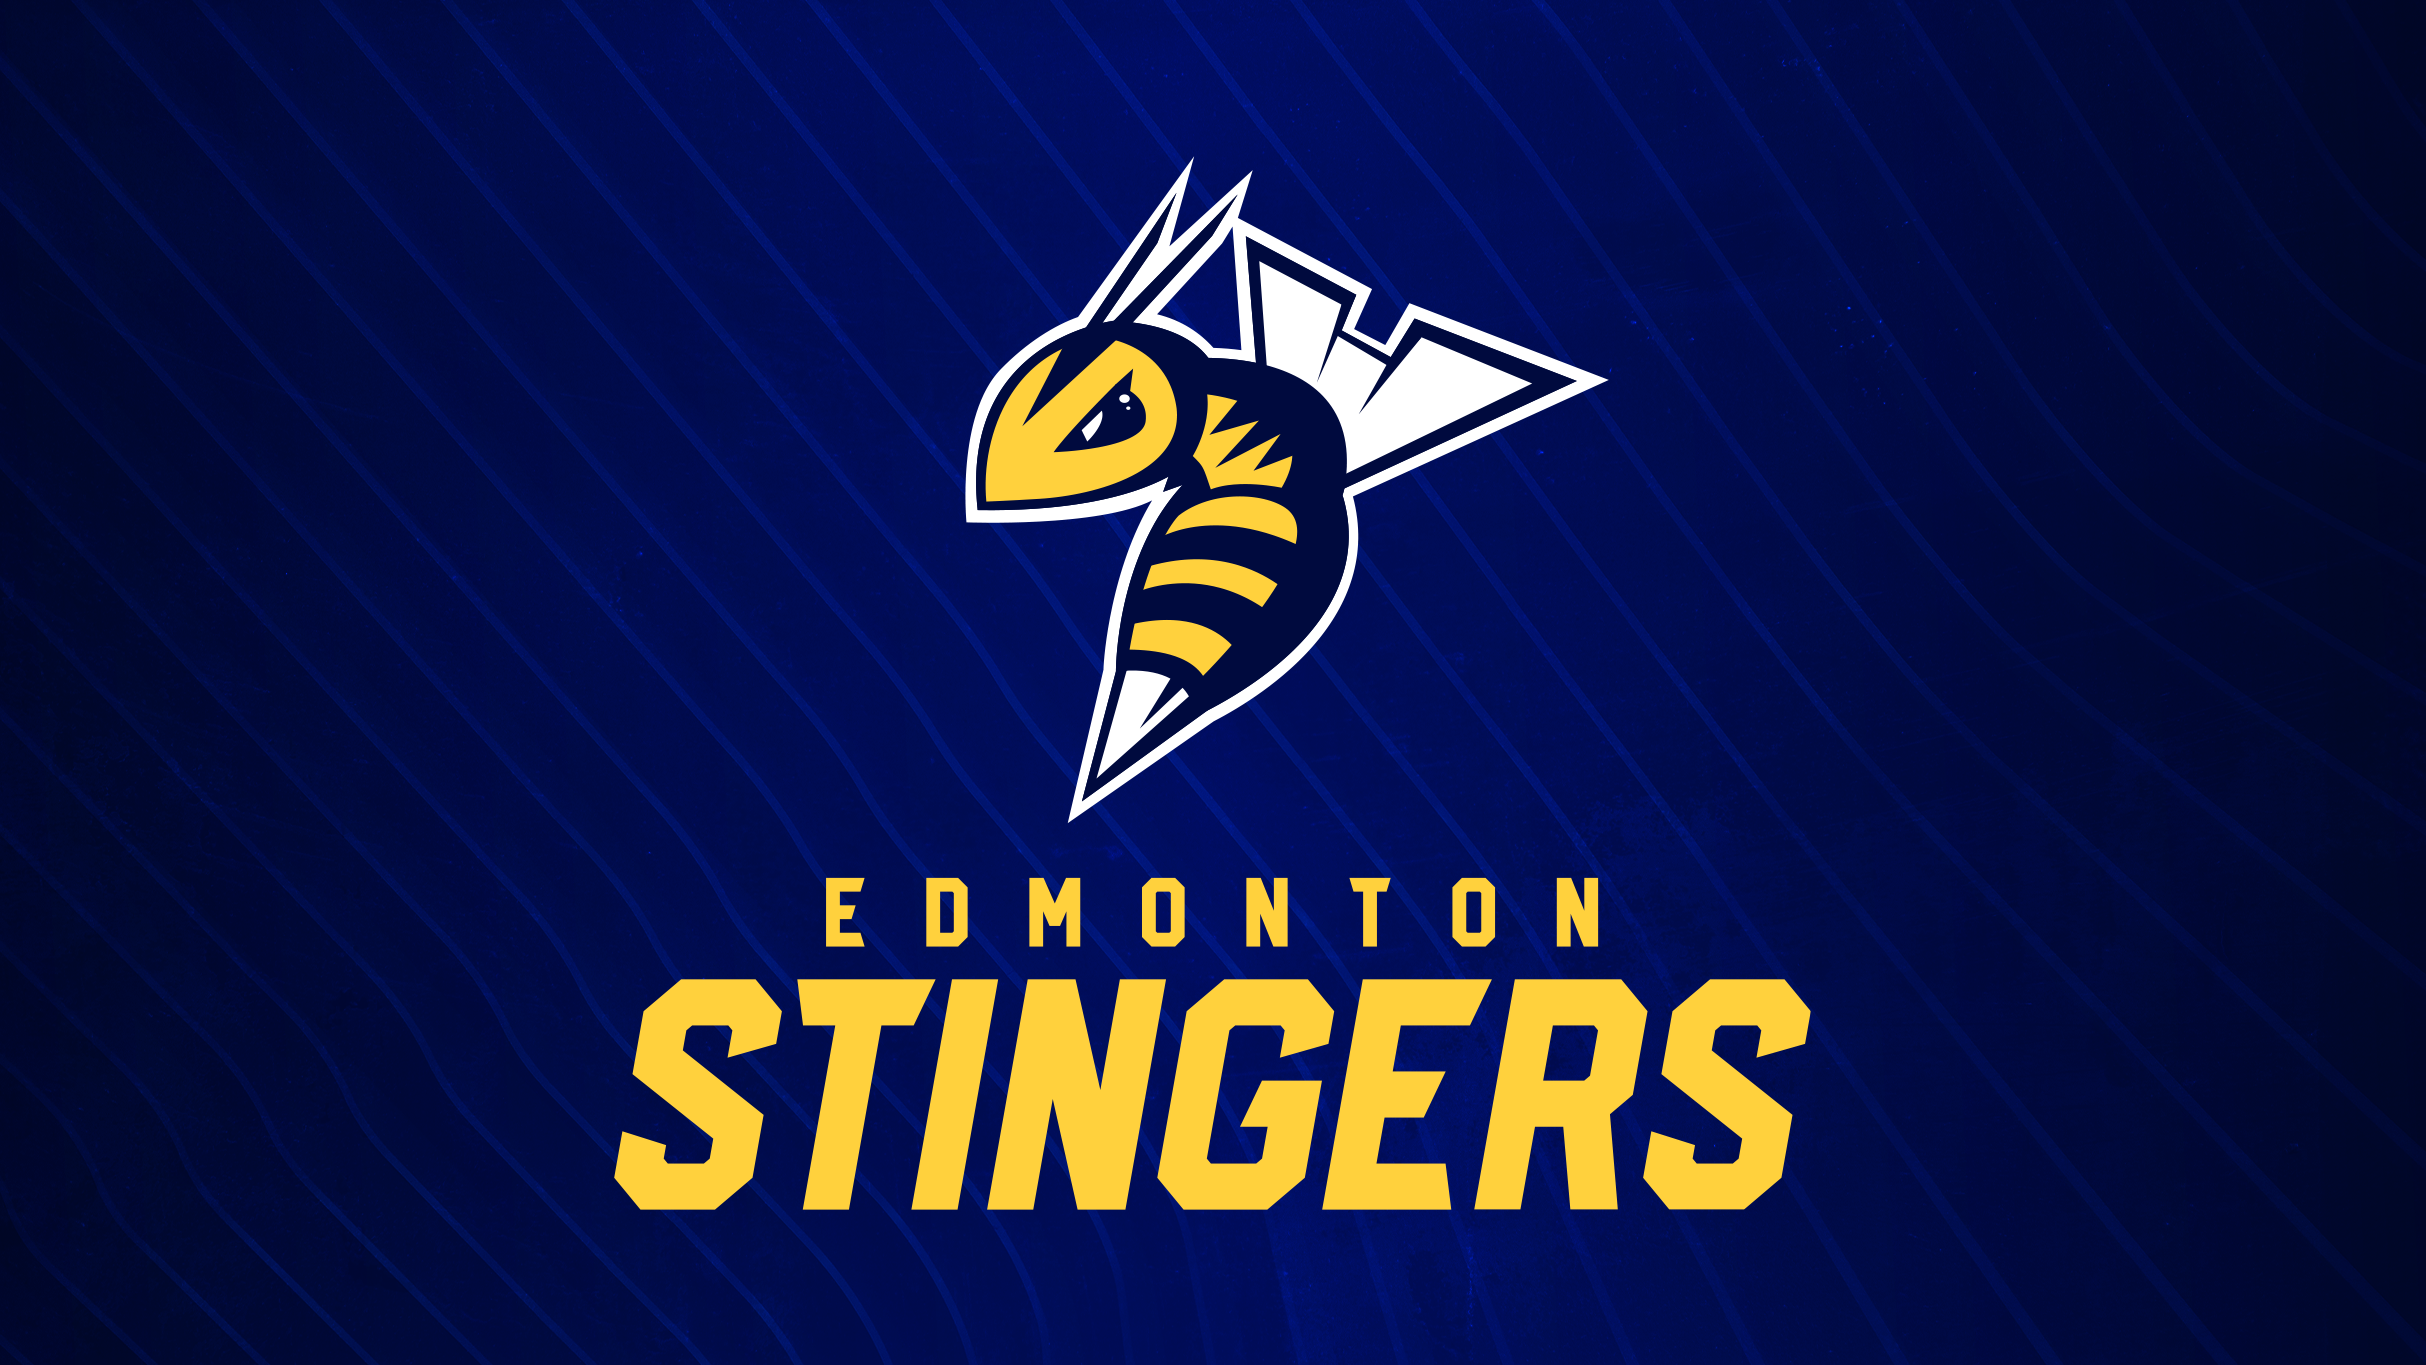 Edmonton Stingers vs. Niagara River Lions